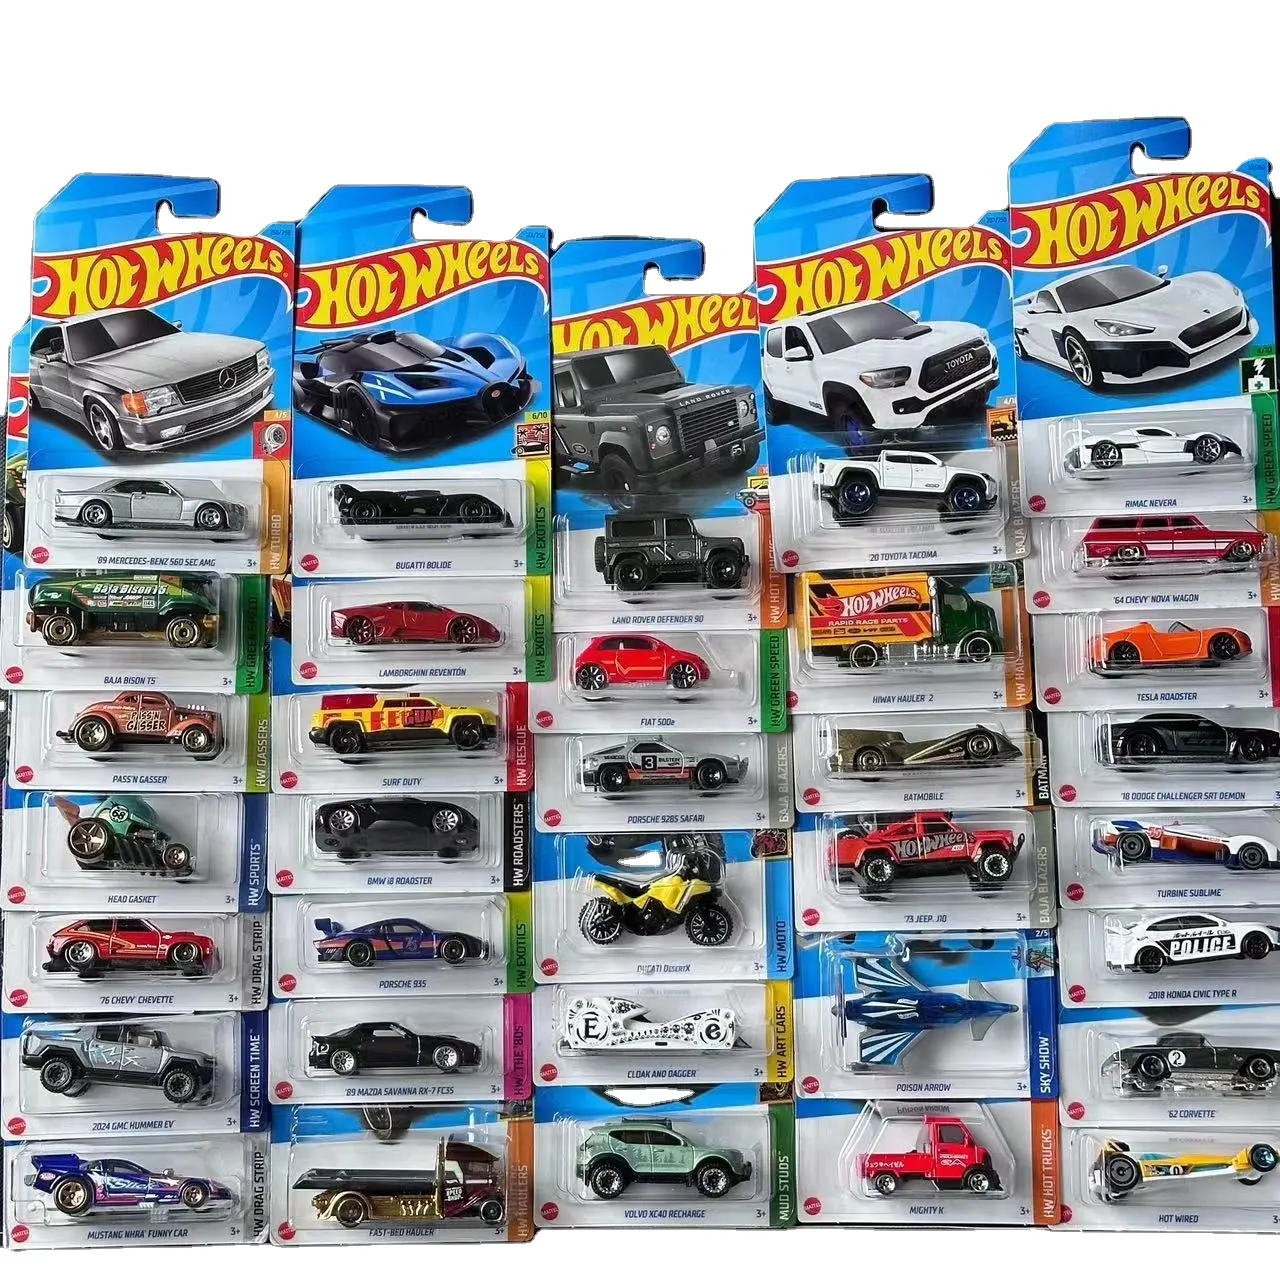 Custom Toy Cars Diecast Car Scale Hobby Models Scale Hot Wheel Diecast Toy Hotwheels Cars Toys Model